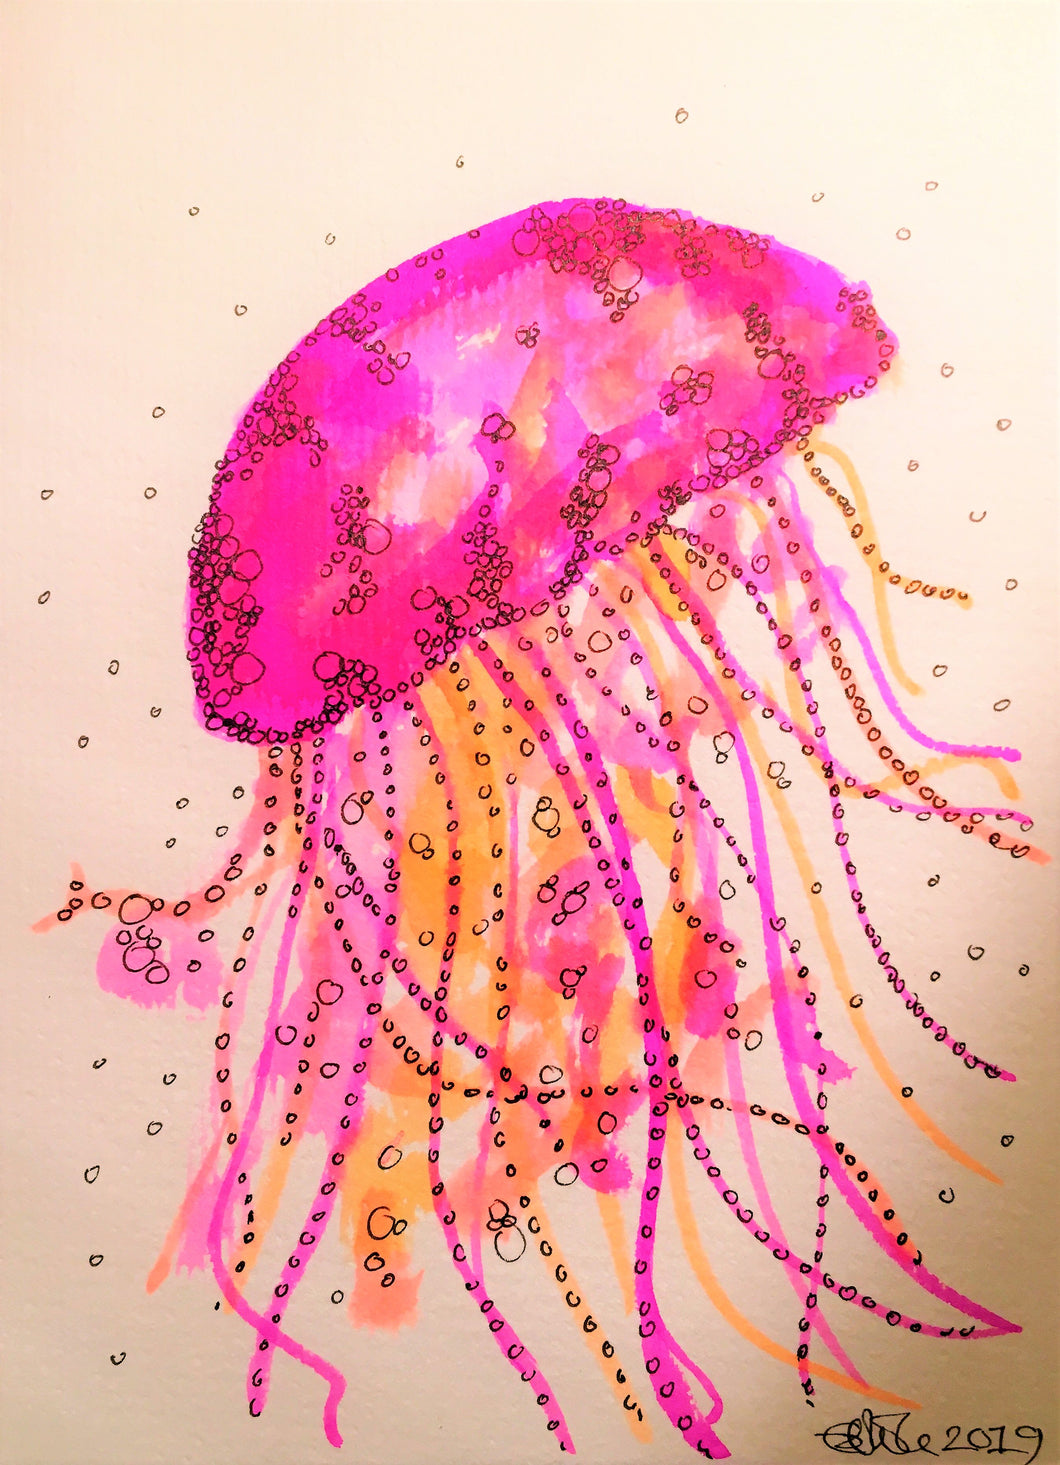 Handpainted Watercolour Greeting Card - Pink/Orange Jellyfish - eDgE dEsiGn London